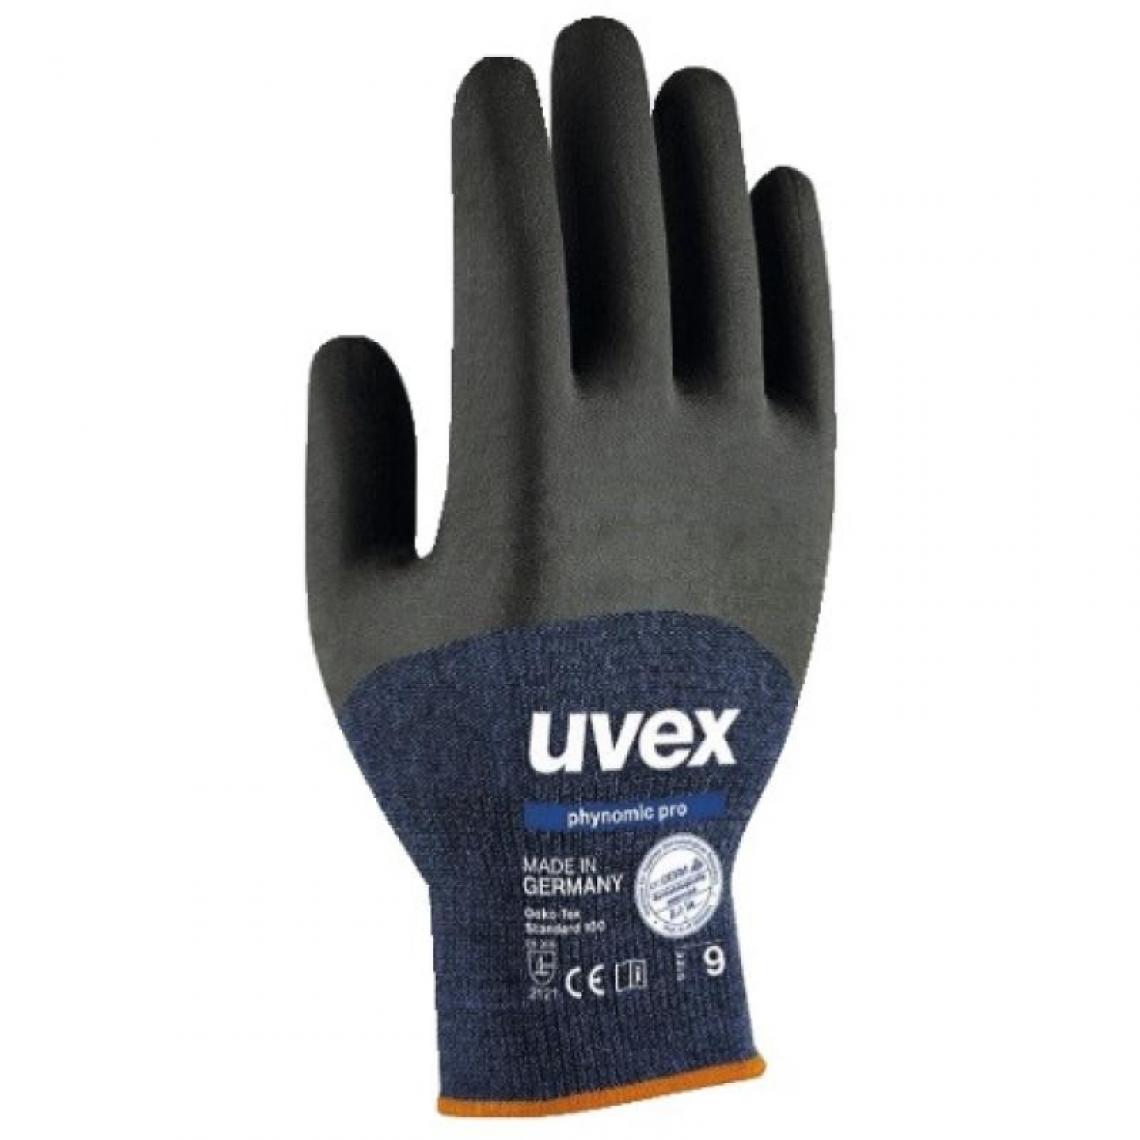 Uvex - Gants phynomic pro T10 (bt10) - Protections pieds et mains